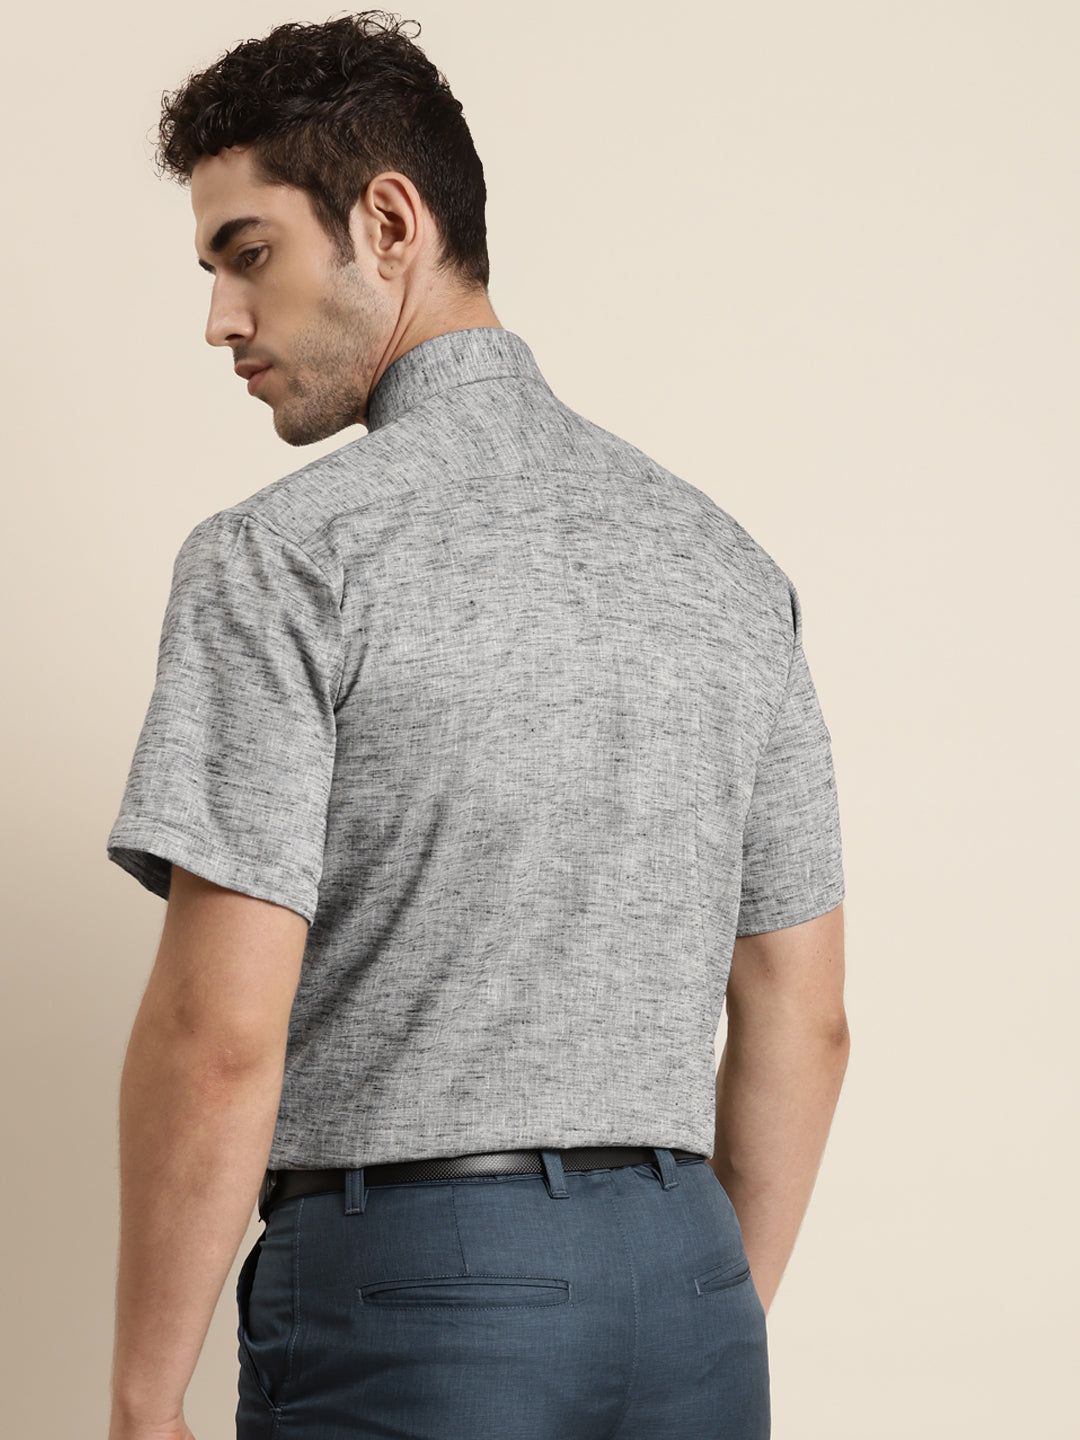 Men's Cotton Blend Grey Half sleeves Casual Shirt